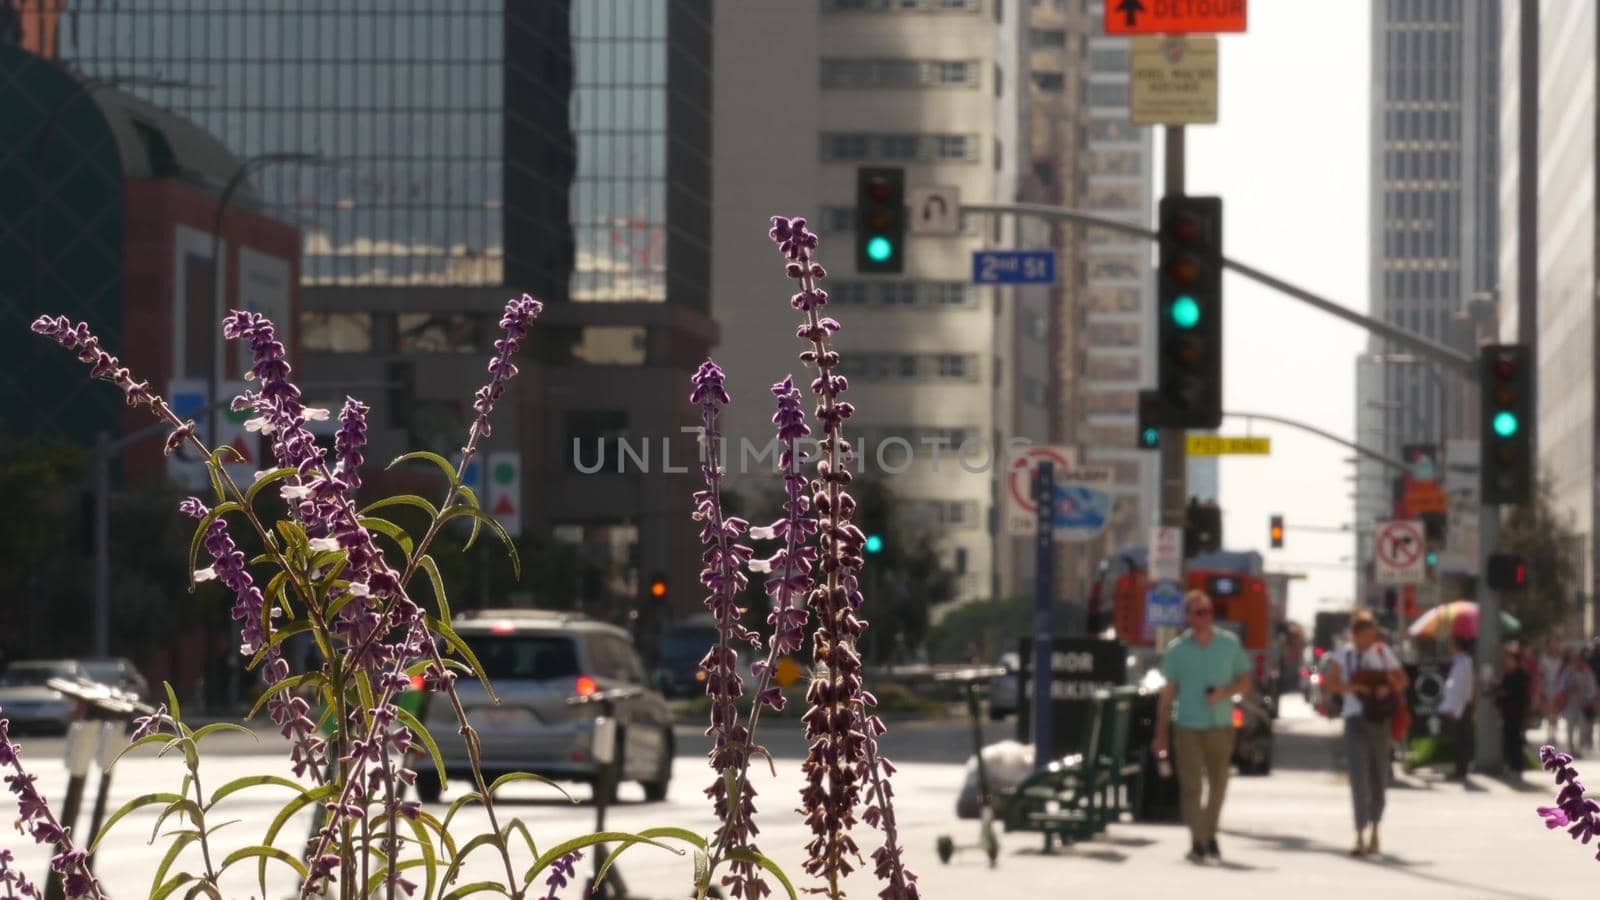 LOS ANGELES, CALIFORNIA, USA - 30 OCT 2019: People walking in metropolis, pedestrians on walkway in urban downtown. Citizens on street in financial district. City dwellers in LA among skyscrapers.